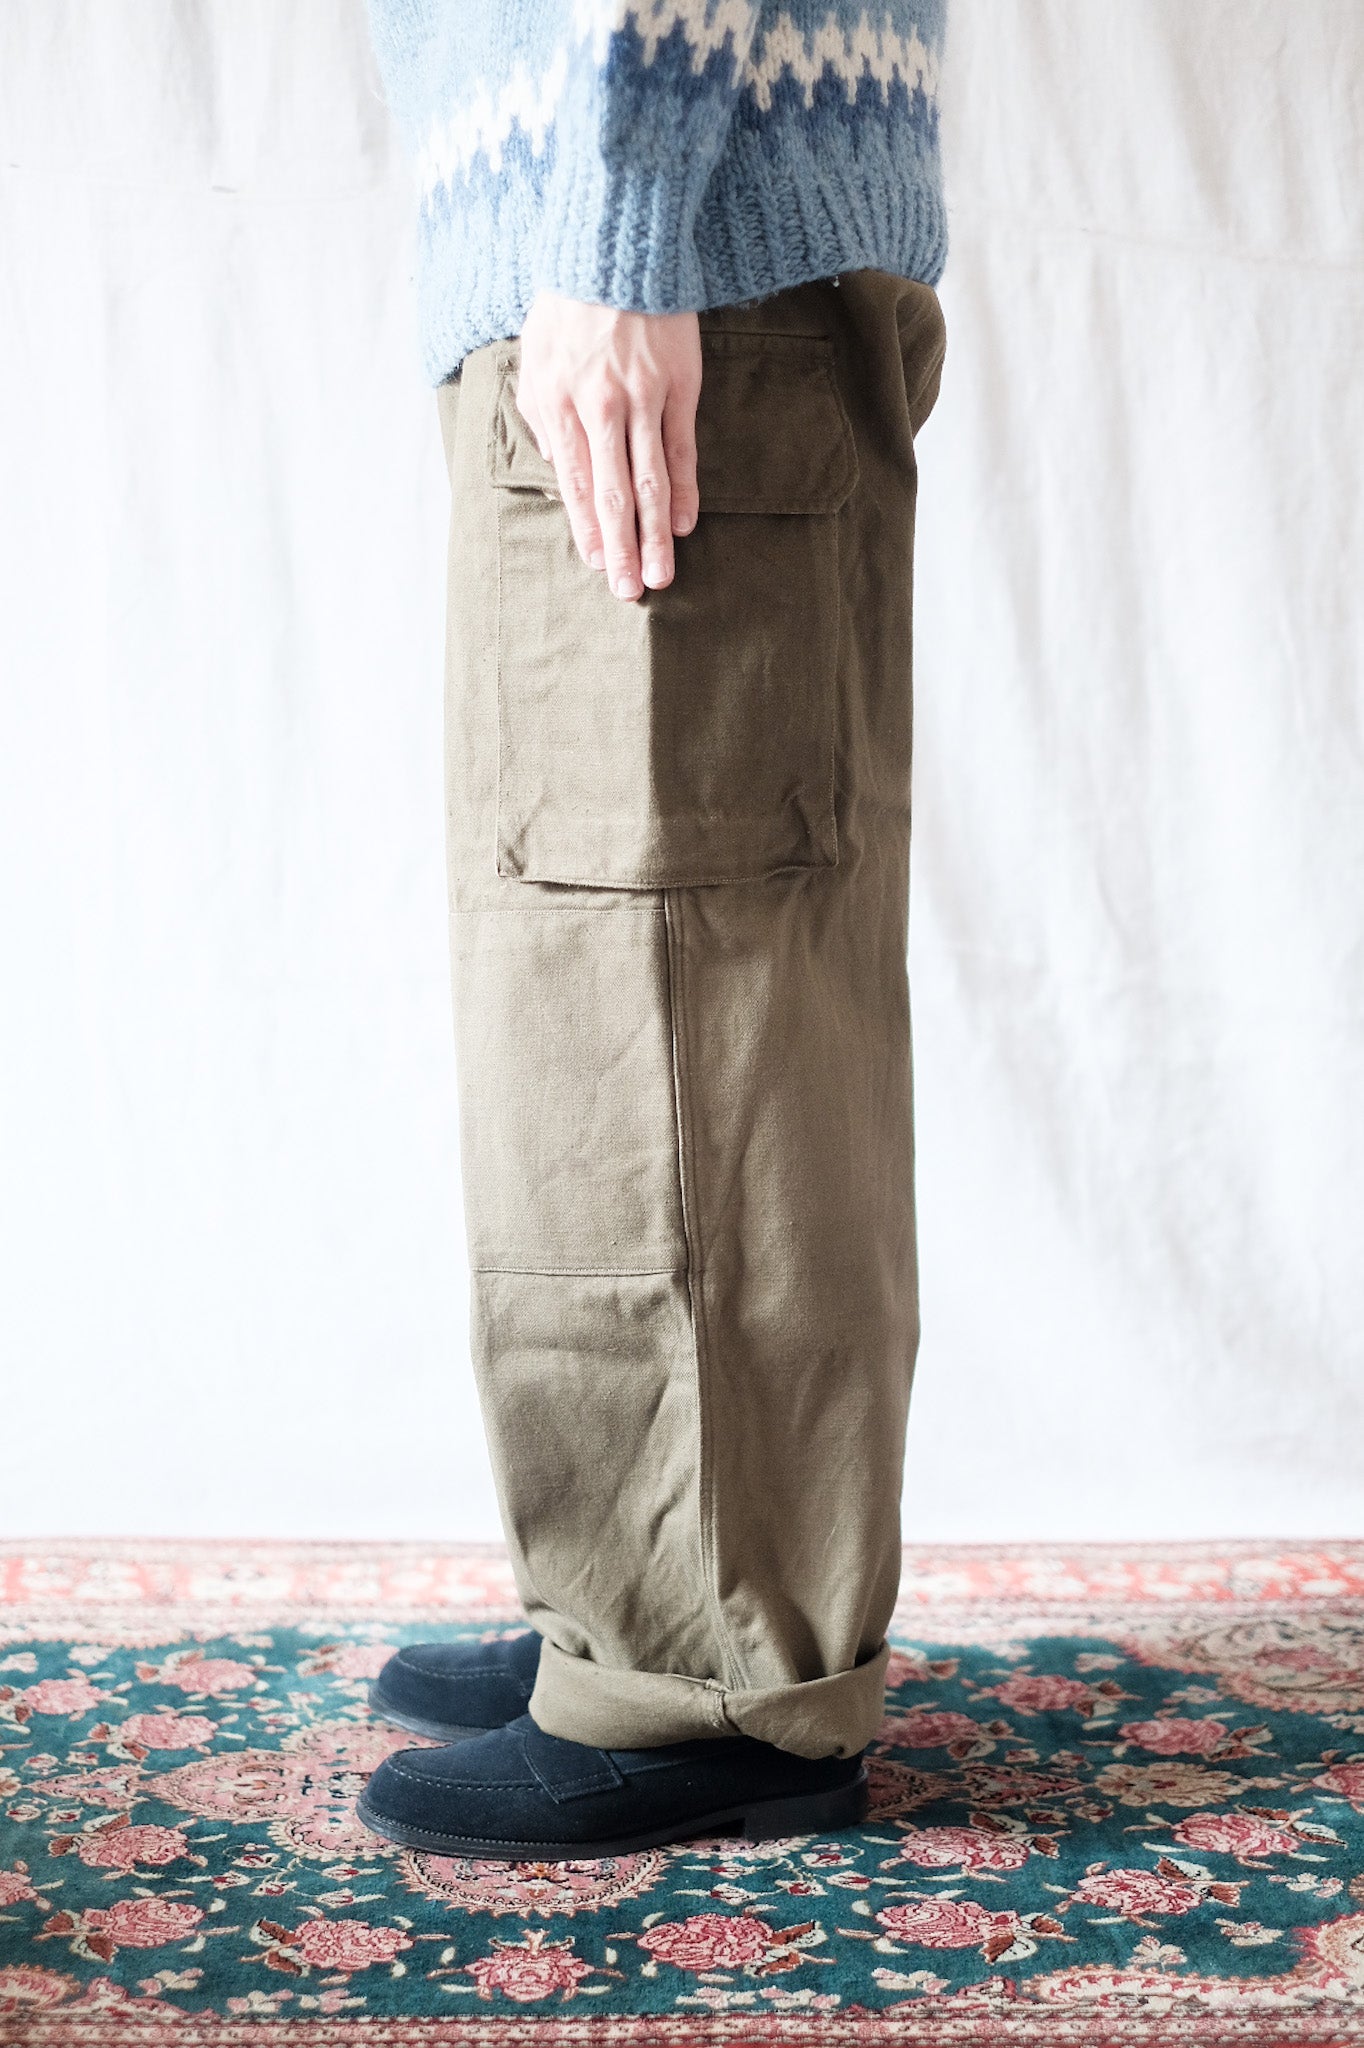 41 Khaki type Trousers ⁡ ⁡ ⁡ ⁡ ⁡ #drybones #ドライボーンズ #1950s #1950sfashion  #1950sstyle #50s #50sfashion | Instagram